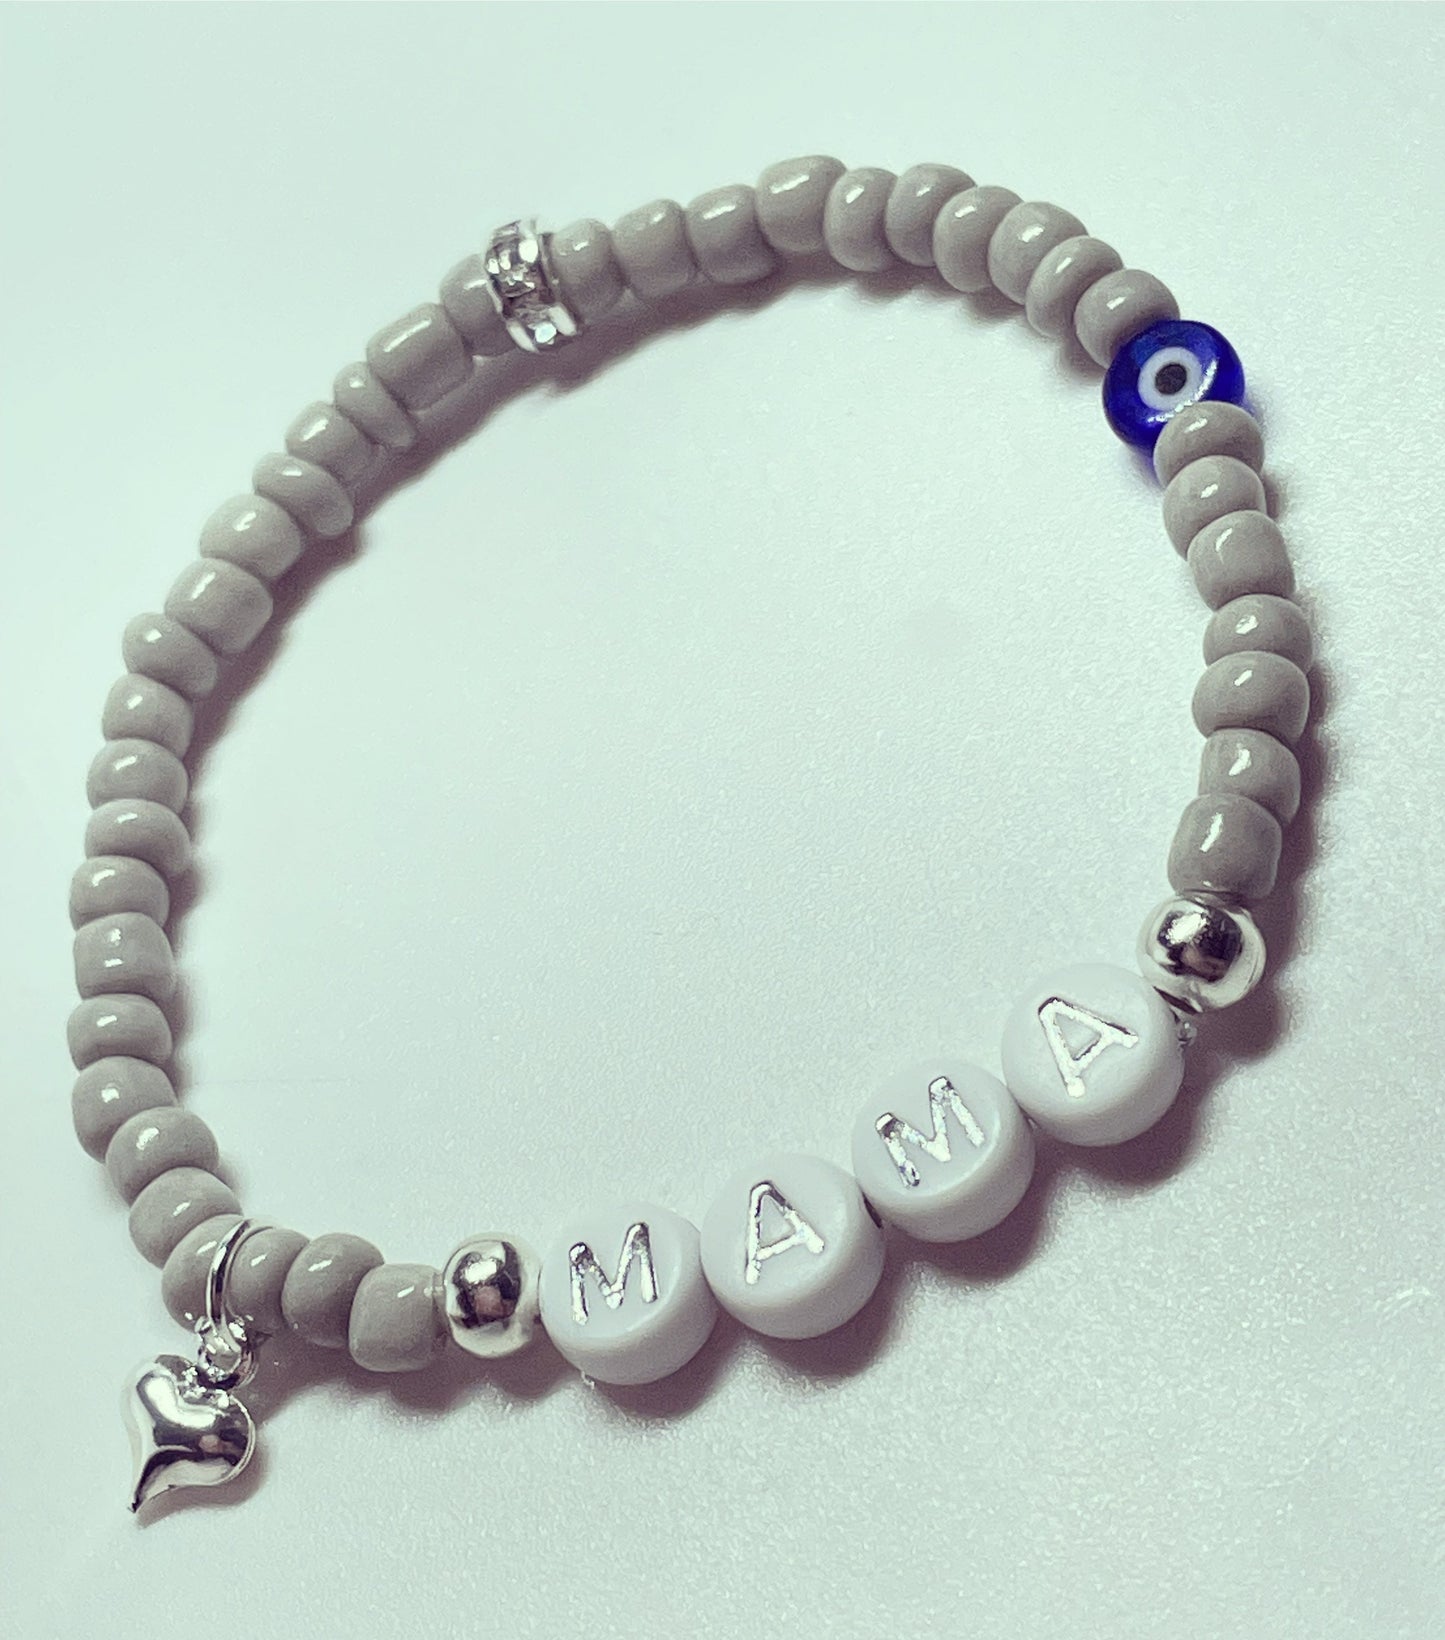 Personalised silk grey glass seed bead bracelet with evil eye